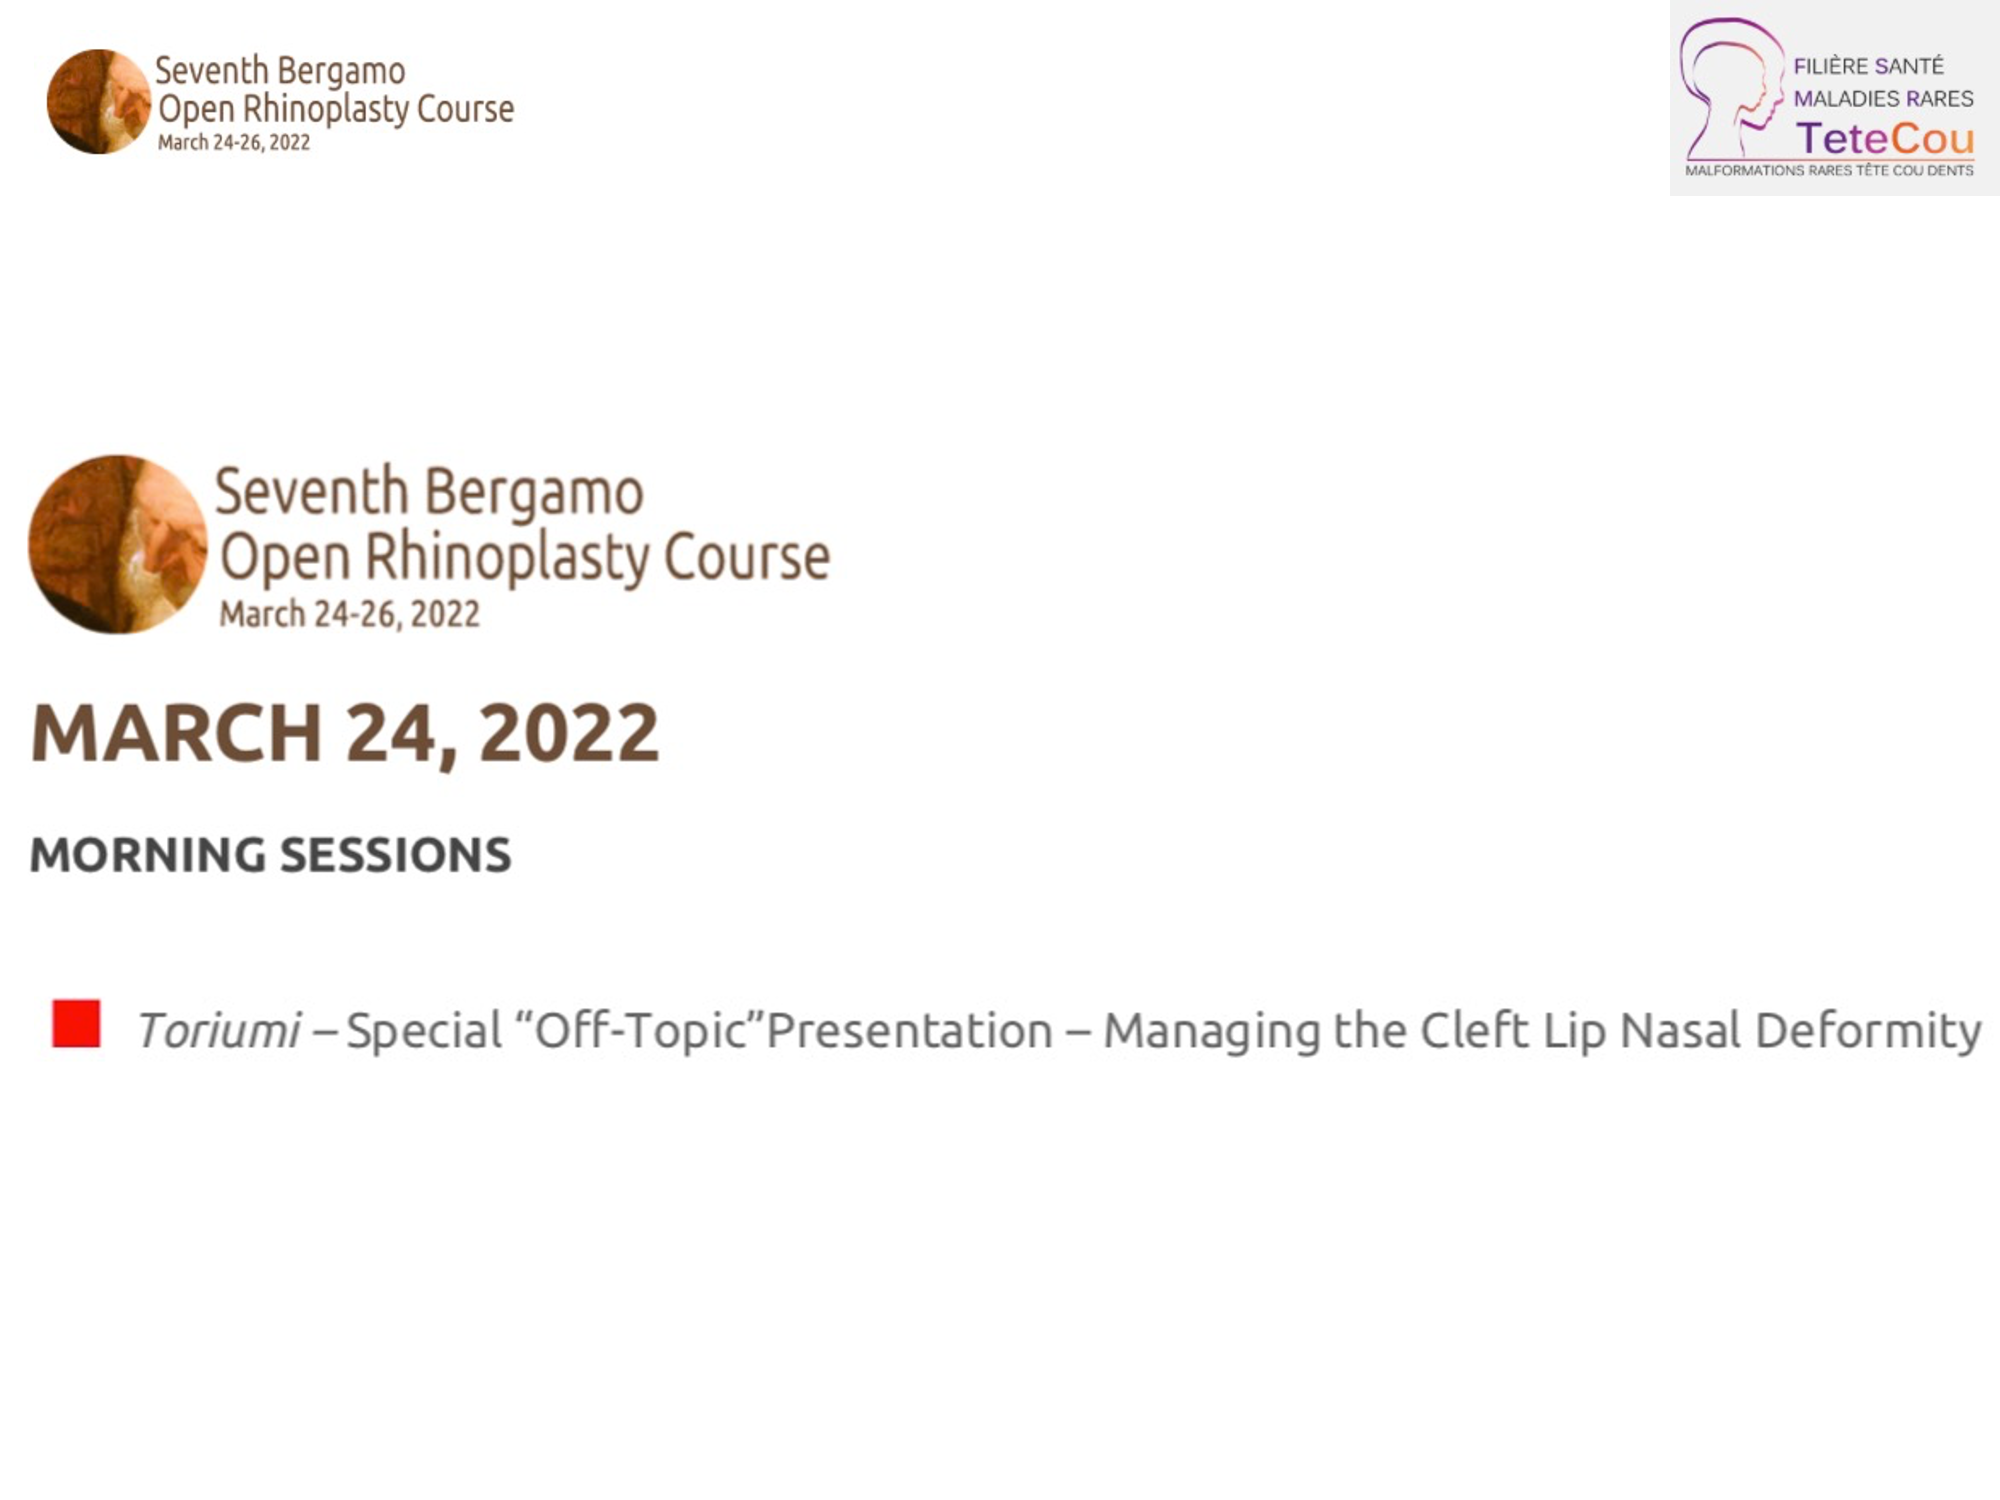 Image Retour JB Caruhel Bergamo rhinoplasty course 3